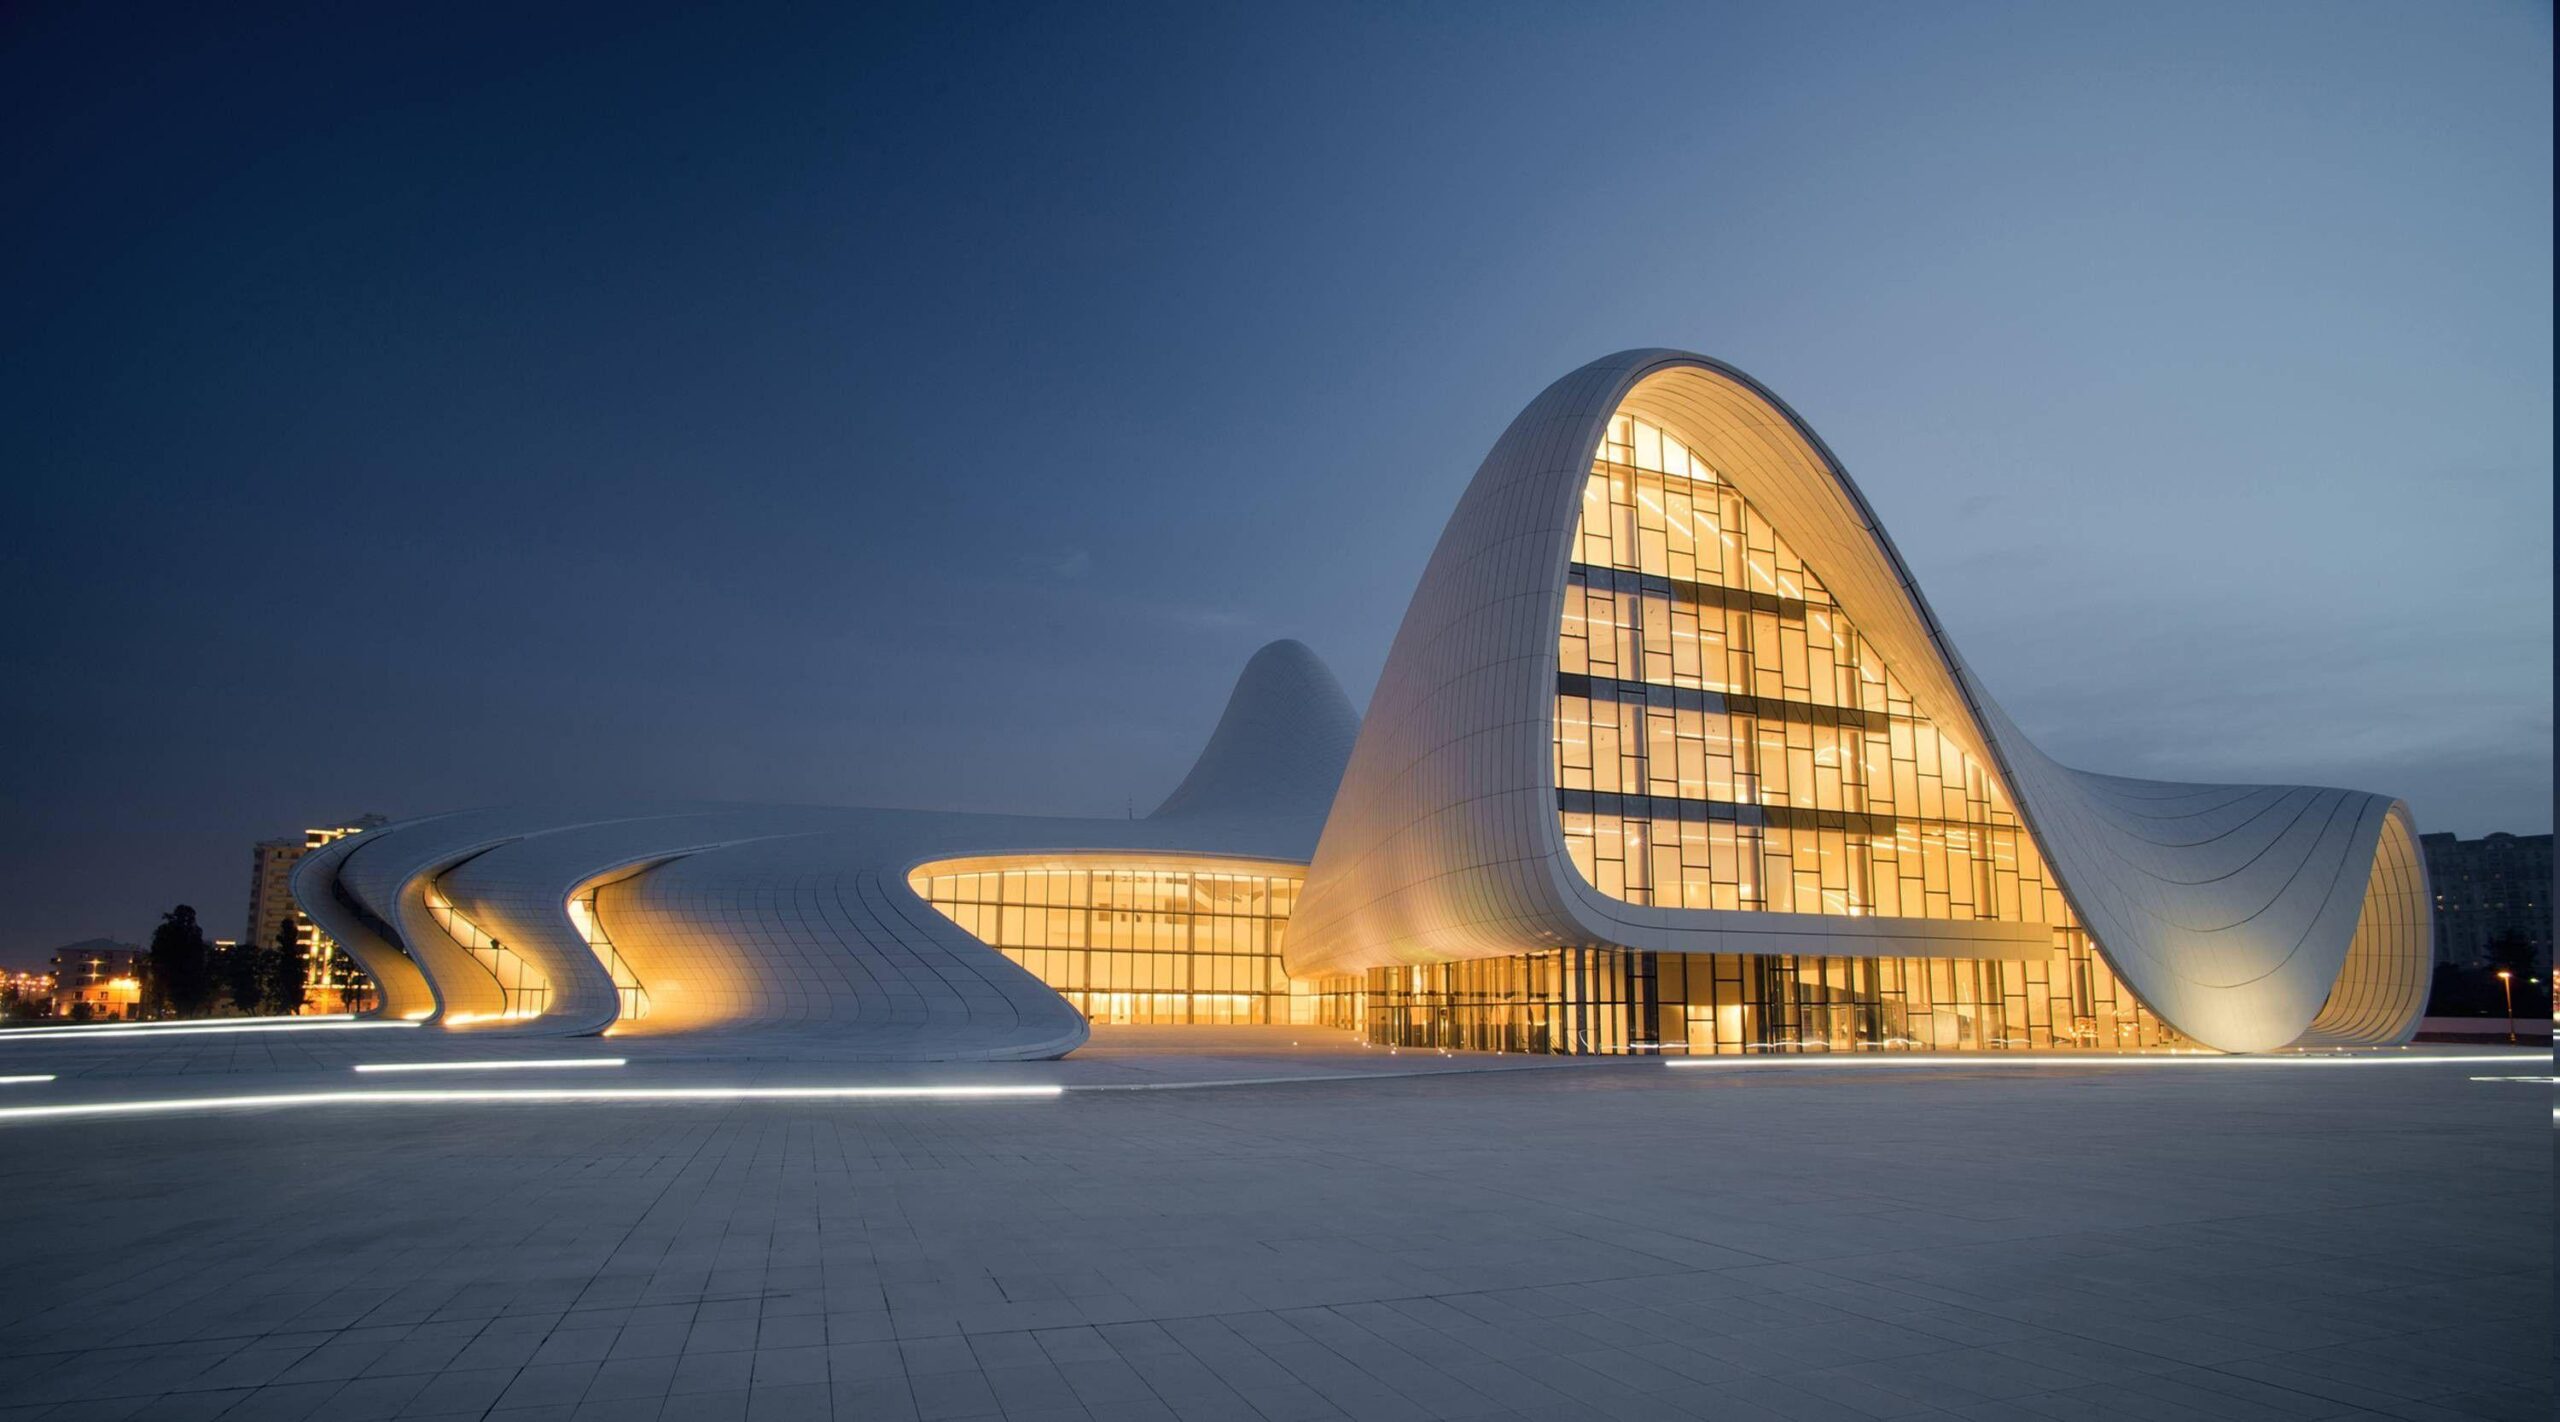 Architecture, Modern, Azerbaijan, Town Square, Lights, Building